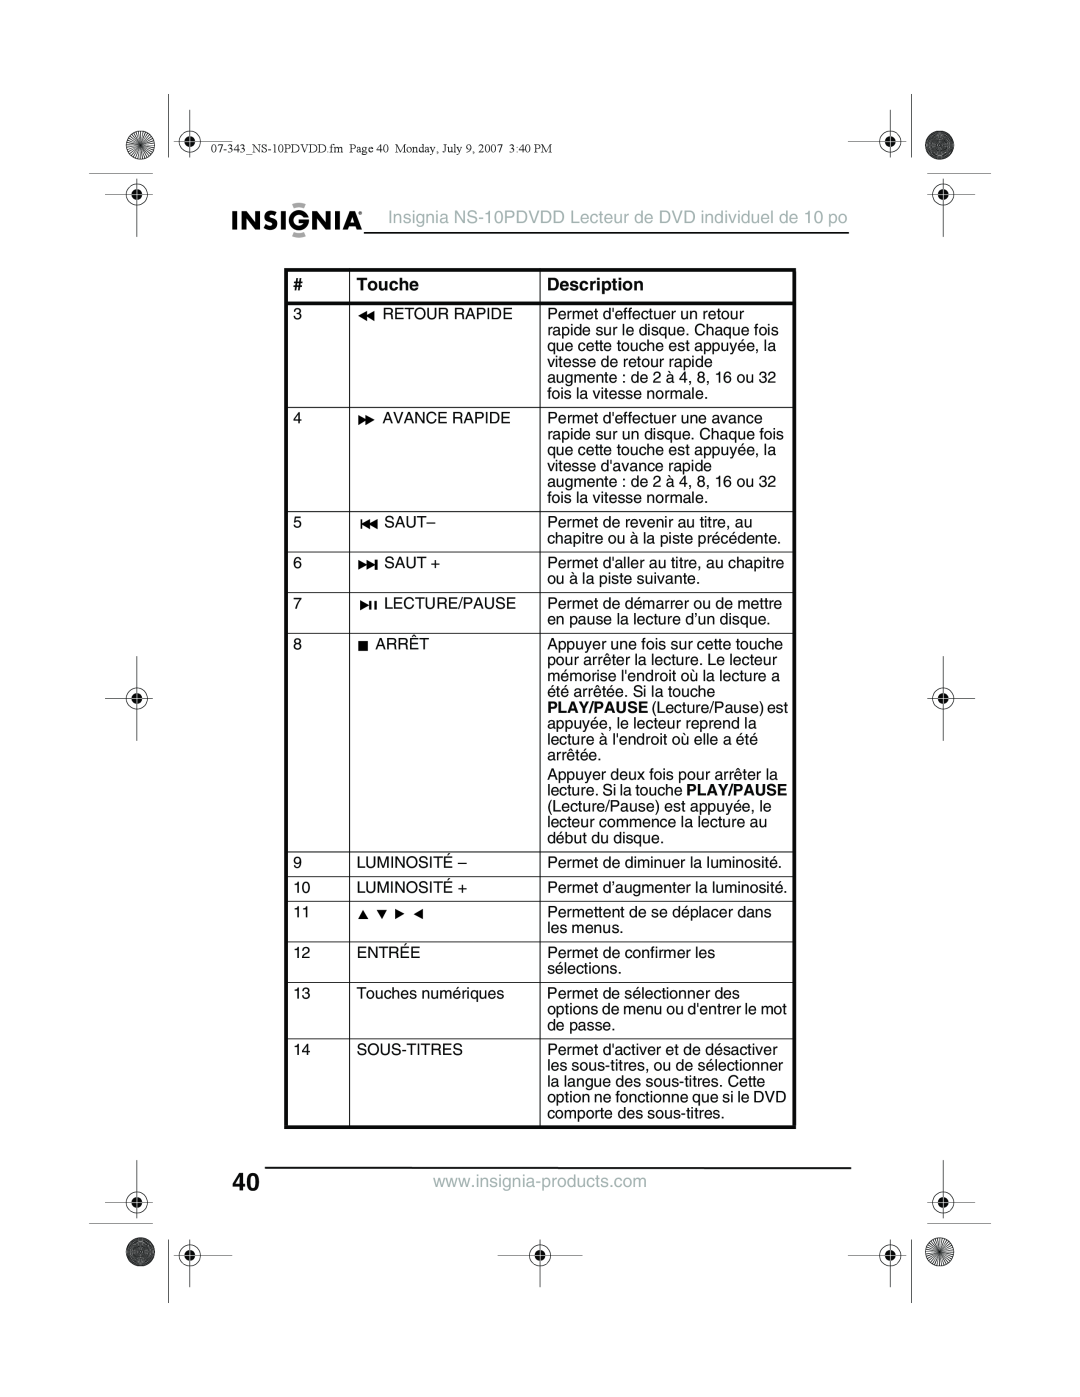 Insignia Insignia NS-10PDVDD Lecteur de DVD individuel de 10 po, Touche, Description, Permet d’augmenter la luminosité 